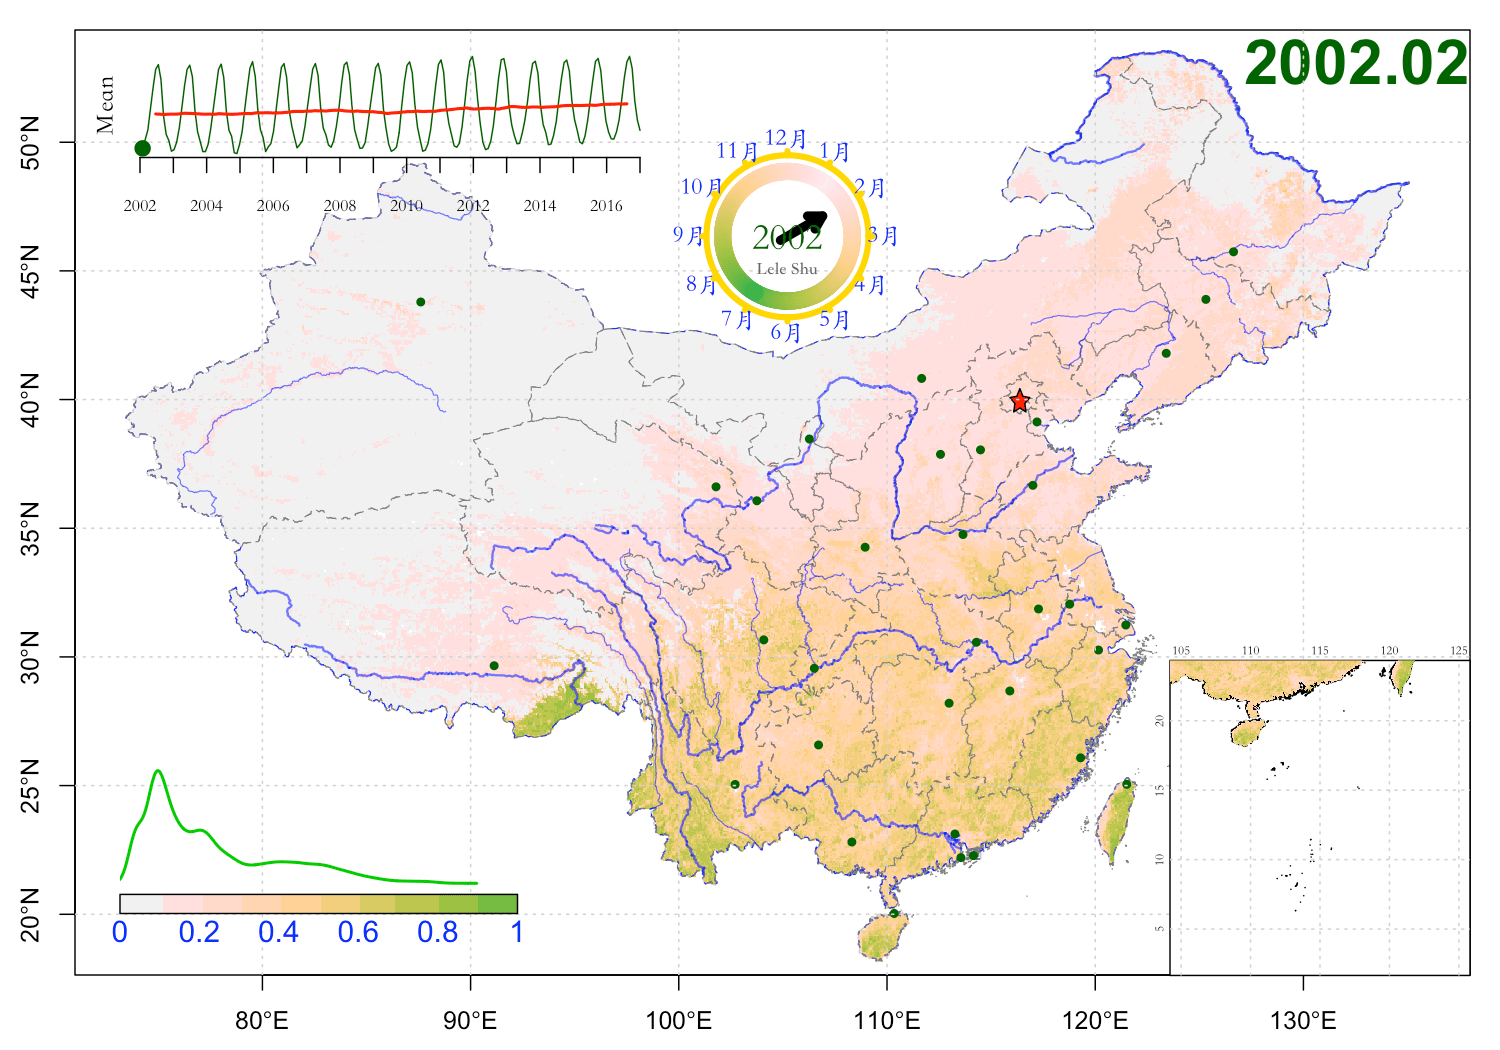 China NDVI on Feb 2002